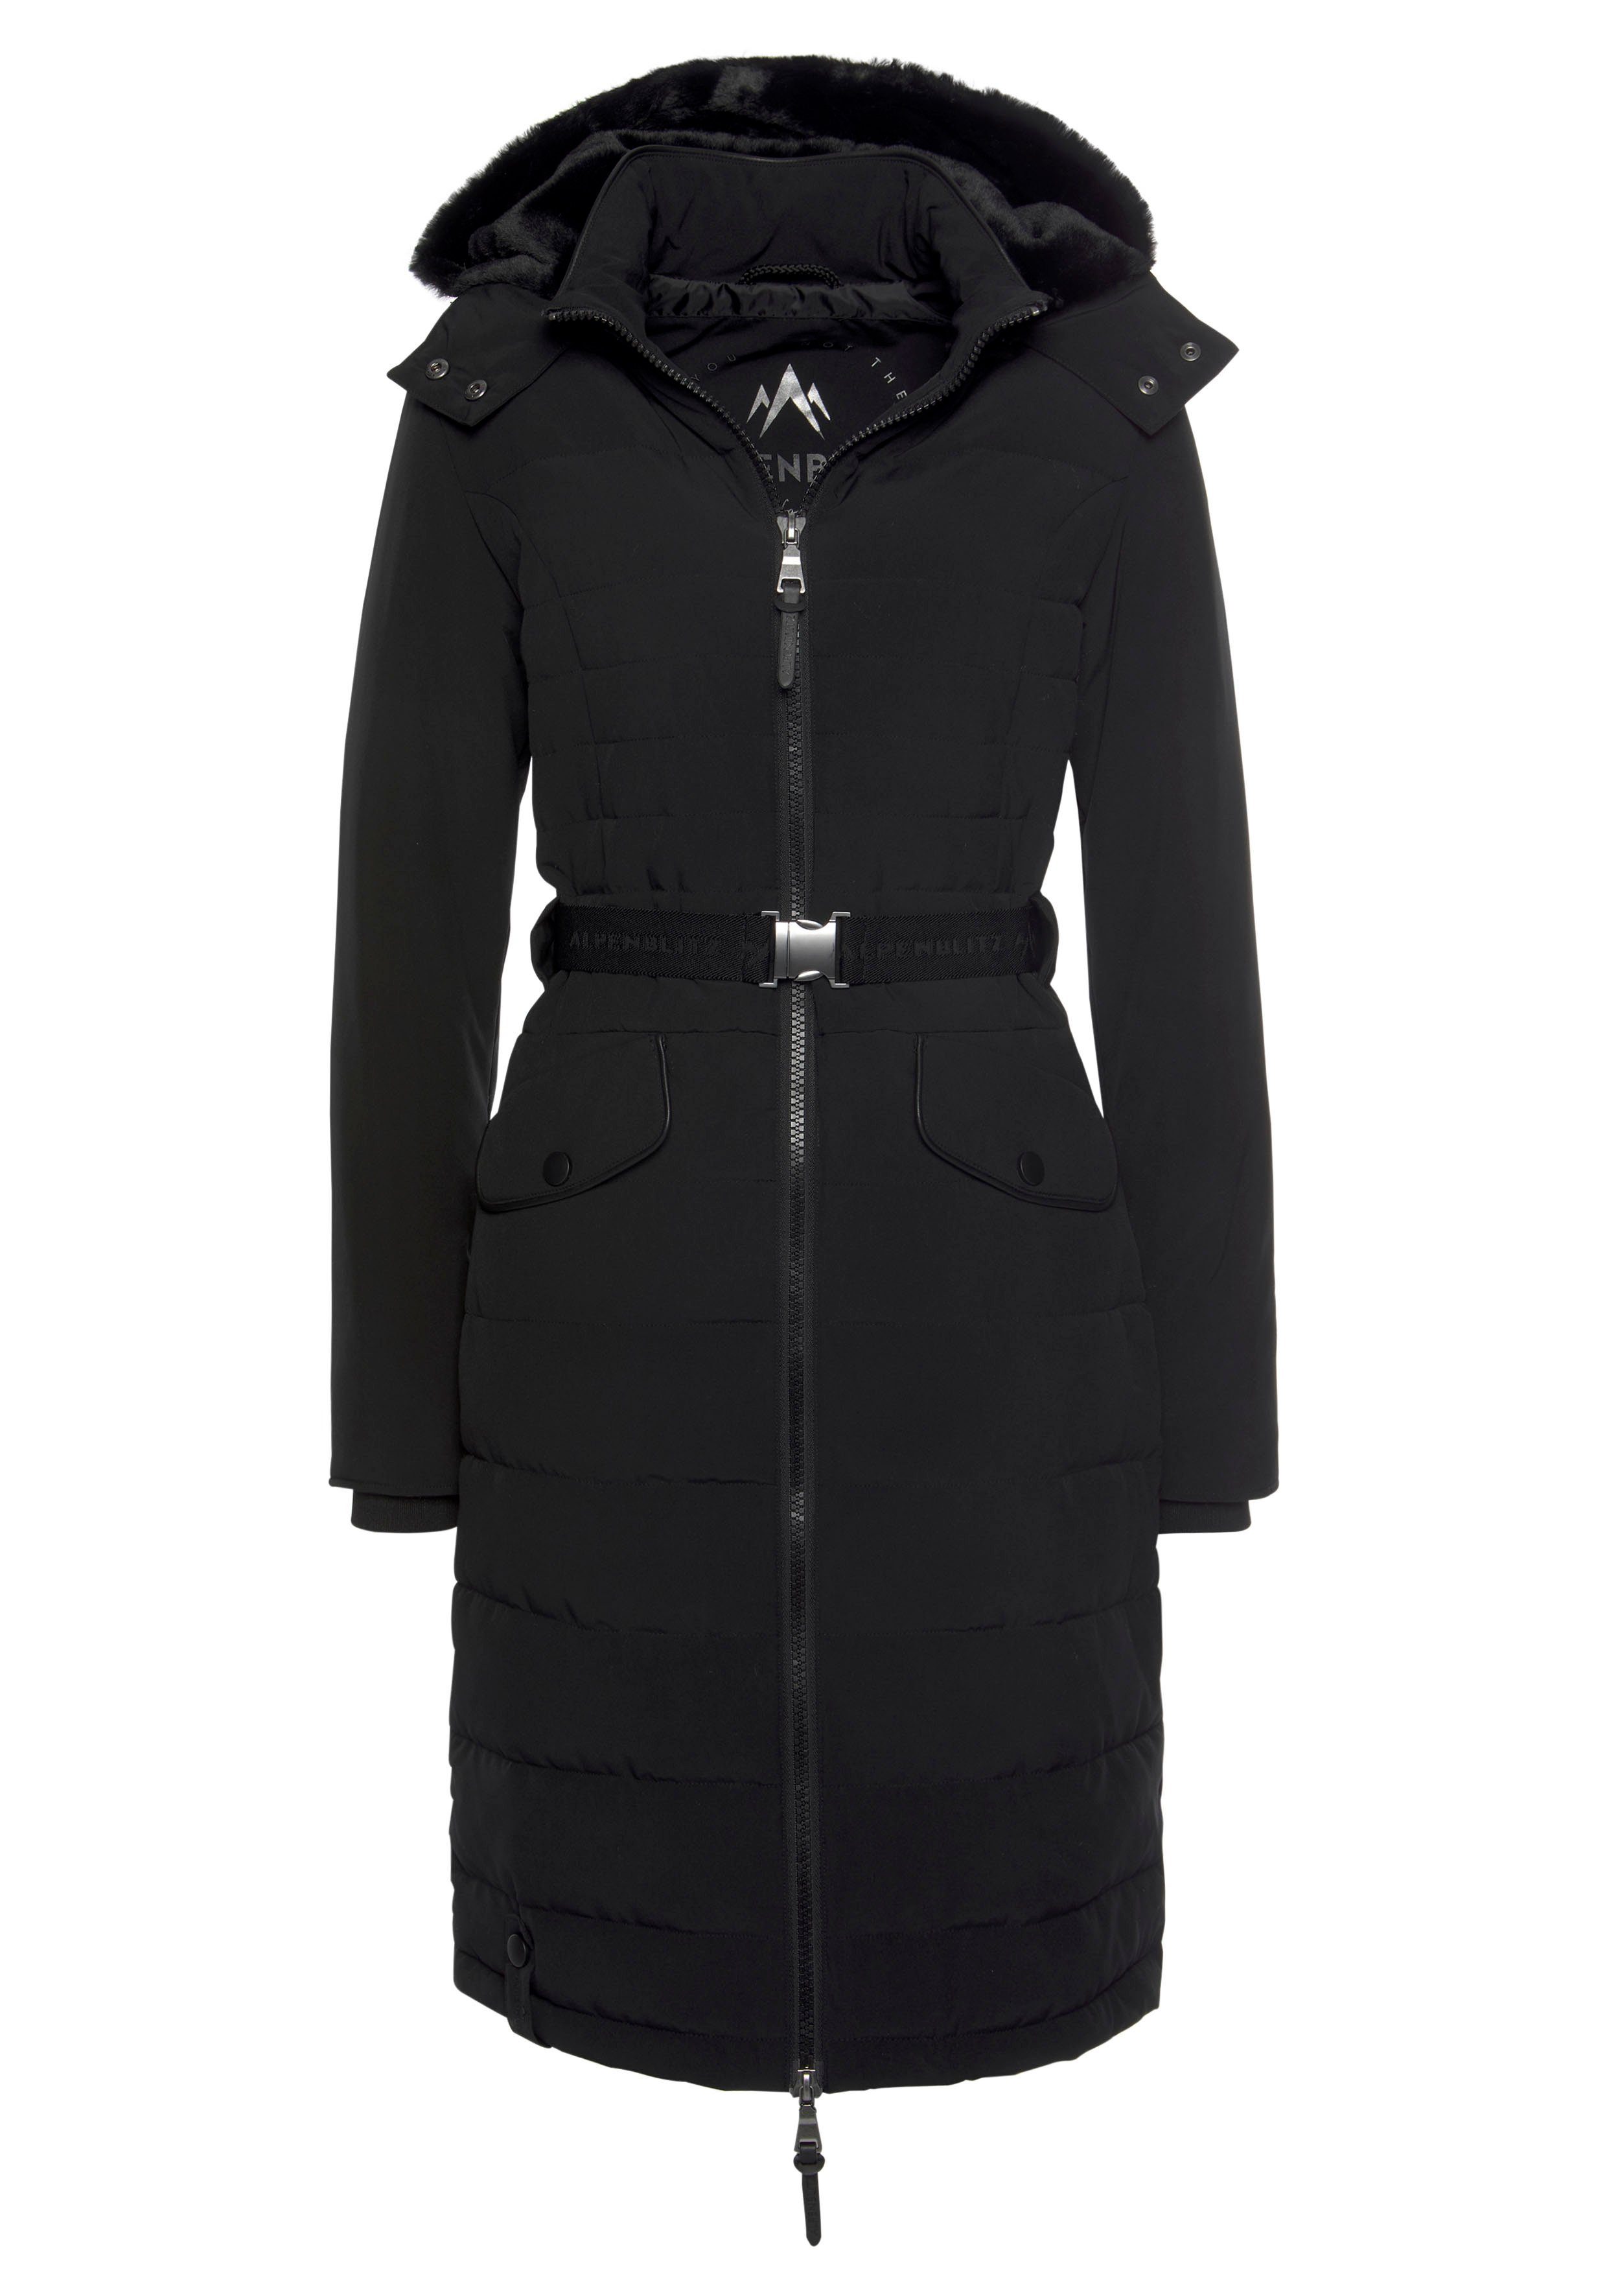 ALPENBLITZ long (Jacke abnehmbarer Kuschel-Kapuze Oslo Material) nachhaltigem auf Markenprägung Steppmantel Mantel Gürtel black mit & aus dem